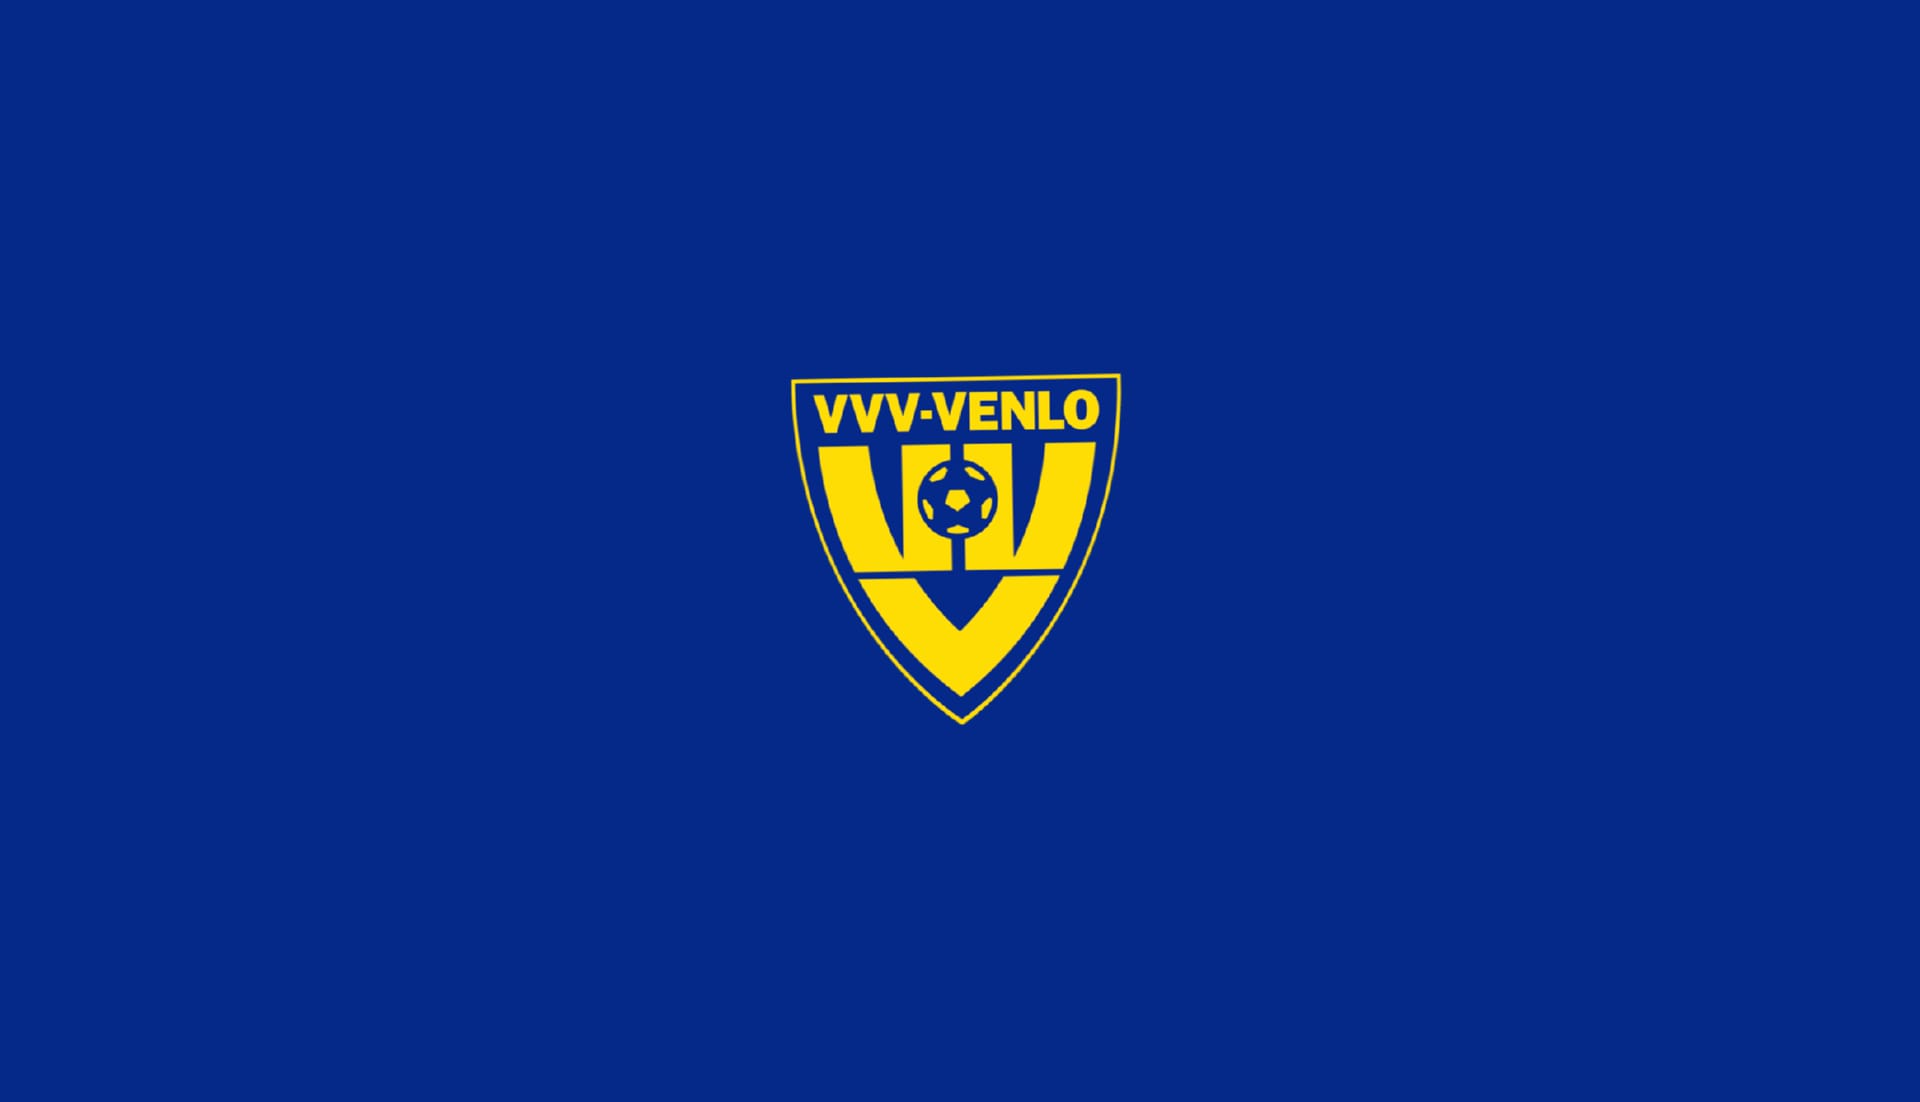 VVV-Venlo wallpapers HD quality